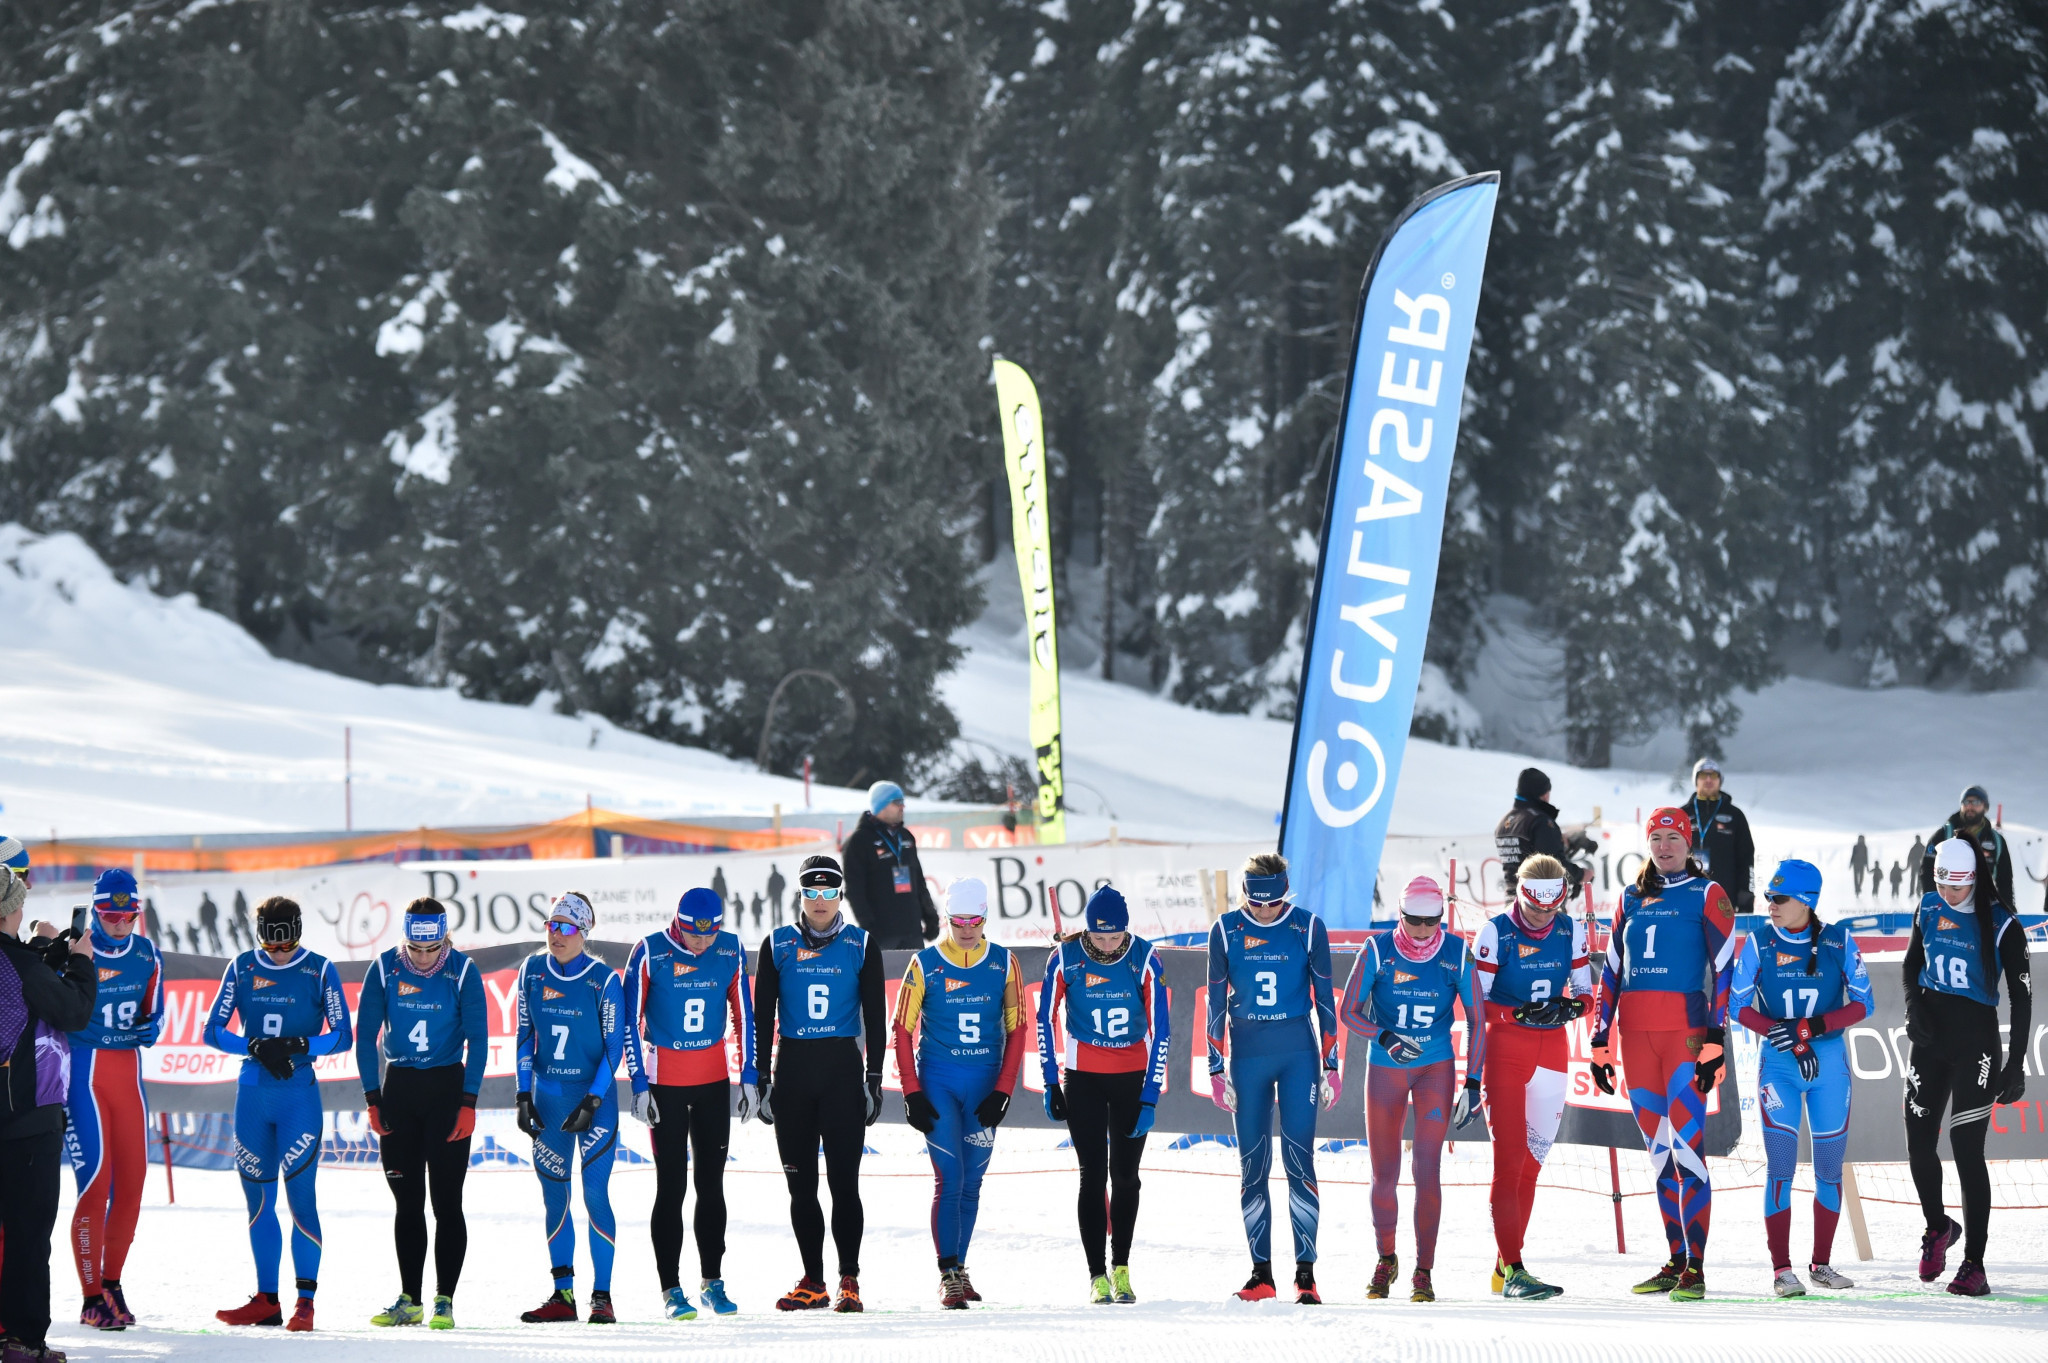 ITU Winter Triathlon World Championships return to Asiago in 2020